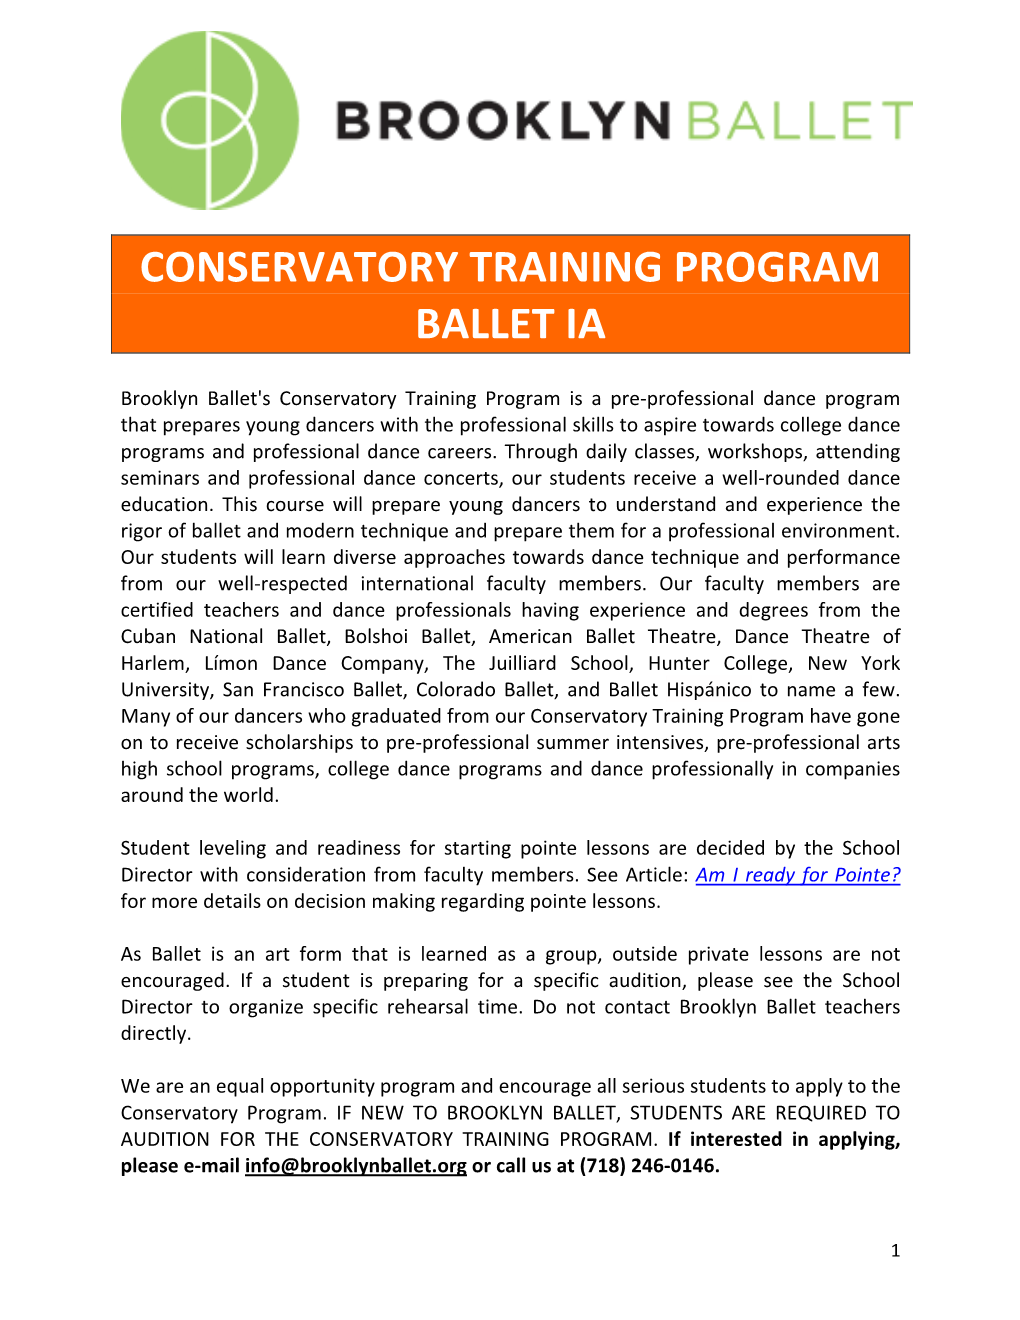 Conservatory Training Program Ballet Ia